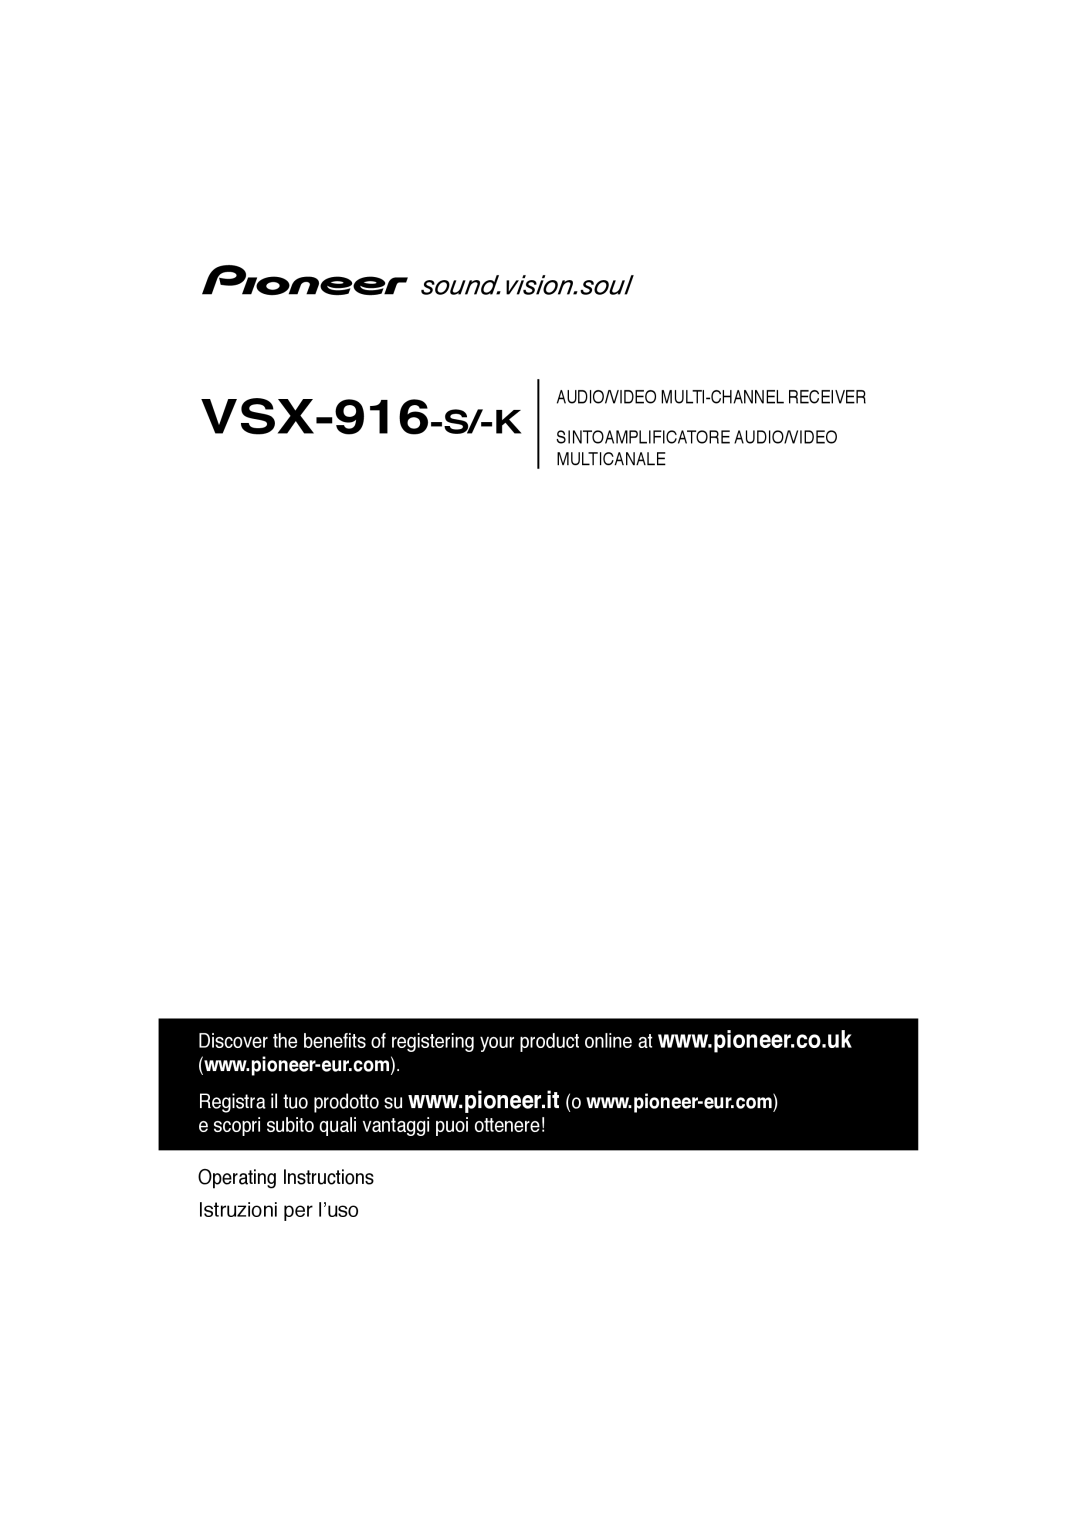 Pioneer VSX-916-K operating instructions VSX-916-S/-K, Operating Instructions Istruzioni per l’uso 